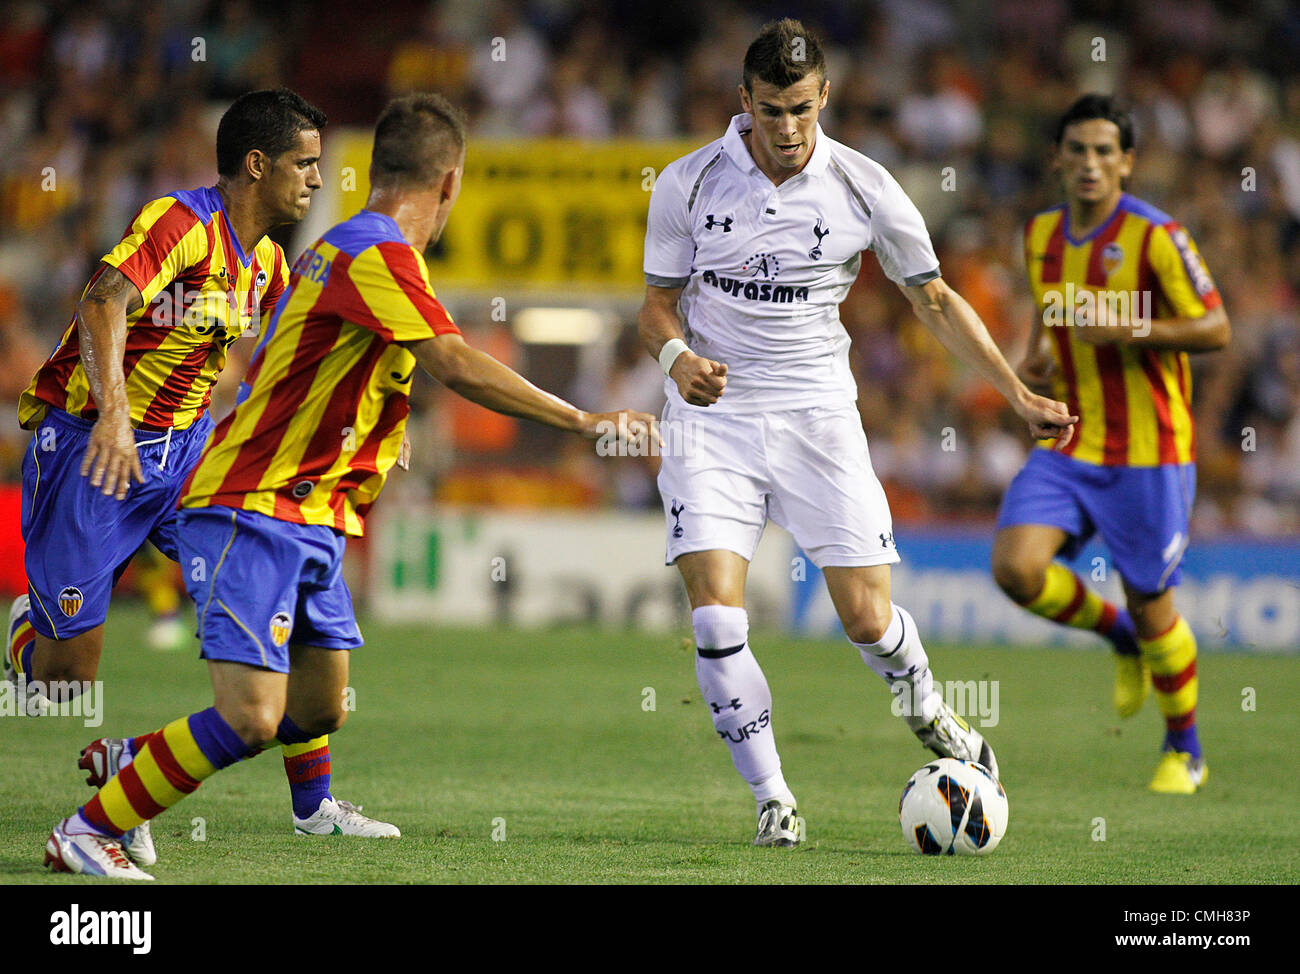 09.08.2012 Friendly match pre season - Valencia CF vs. Tottenham Hotspurs - Estadio MESTALLA, Valencia, Spain - Gareth Bale in action. Stock Photo